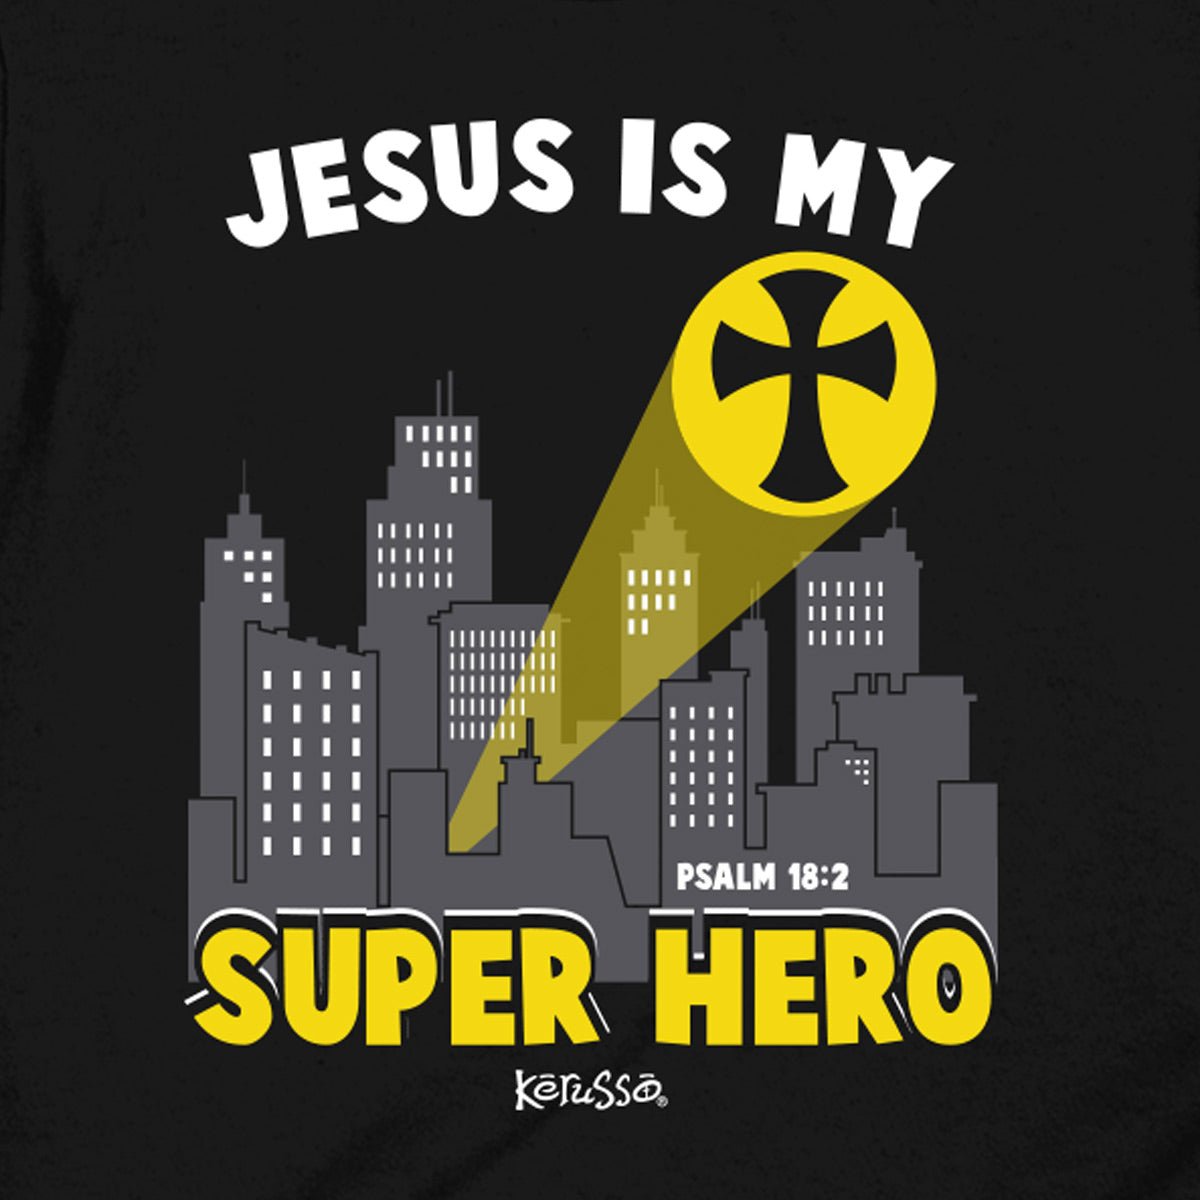 Kerusso Kids T-Shirt Jesus Super Hero | 2FruitBearers